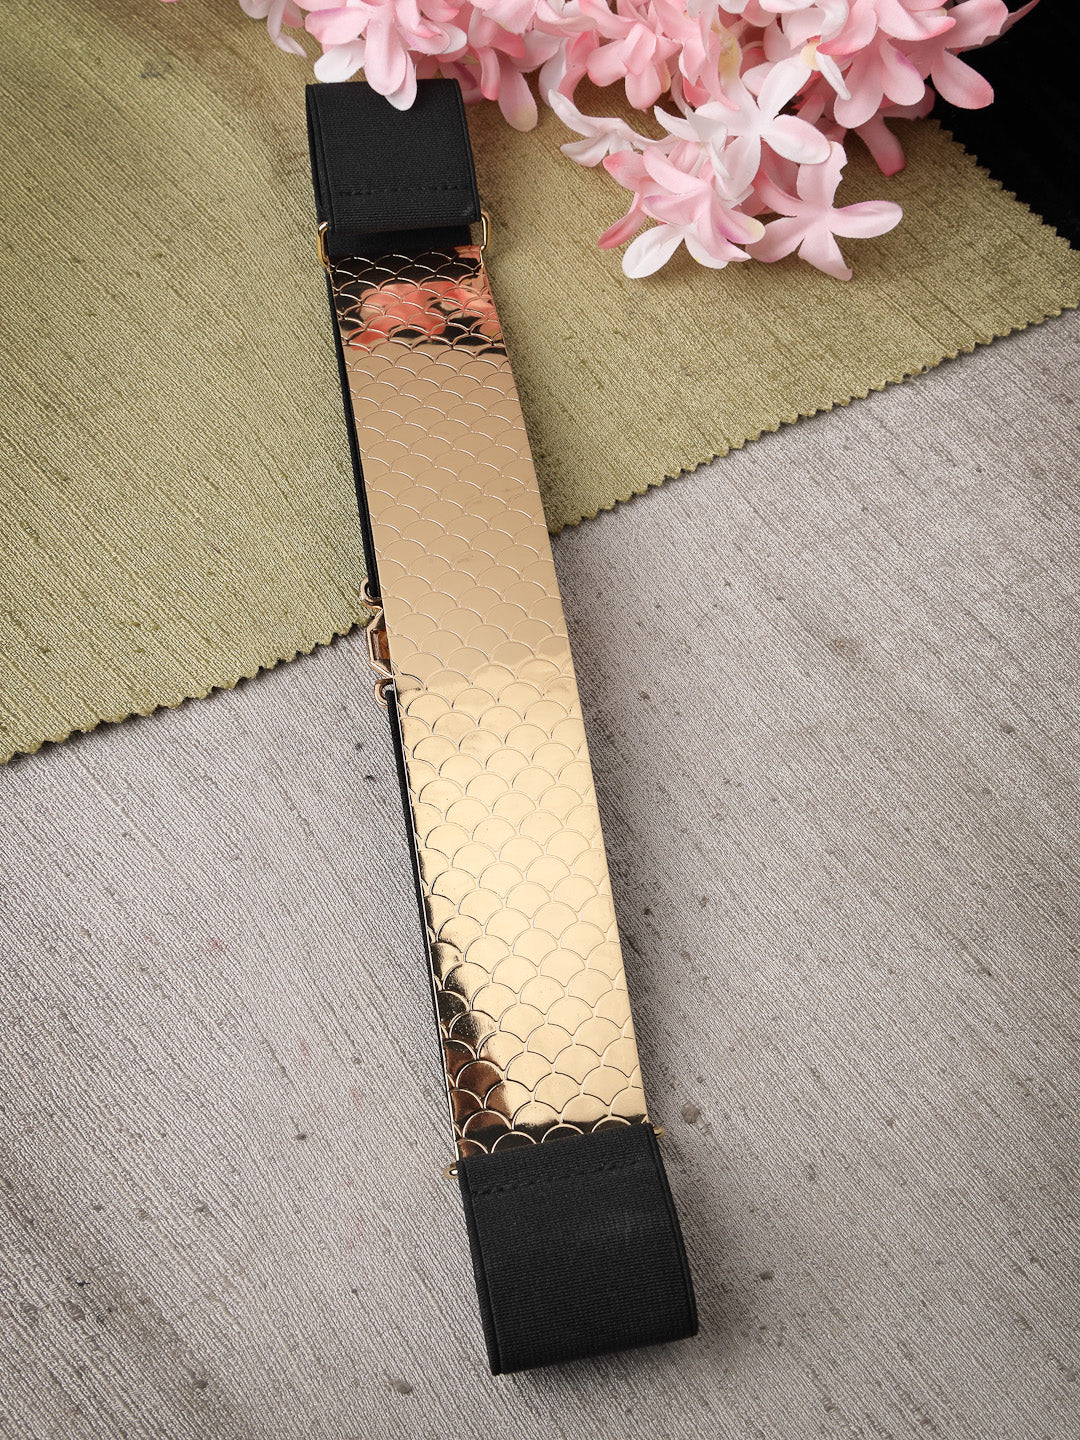 Women's circular gold plated adjustable broad belt - NVR